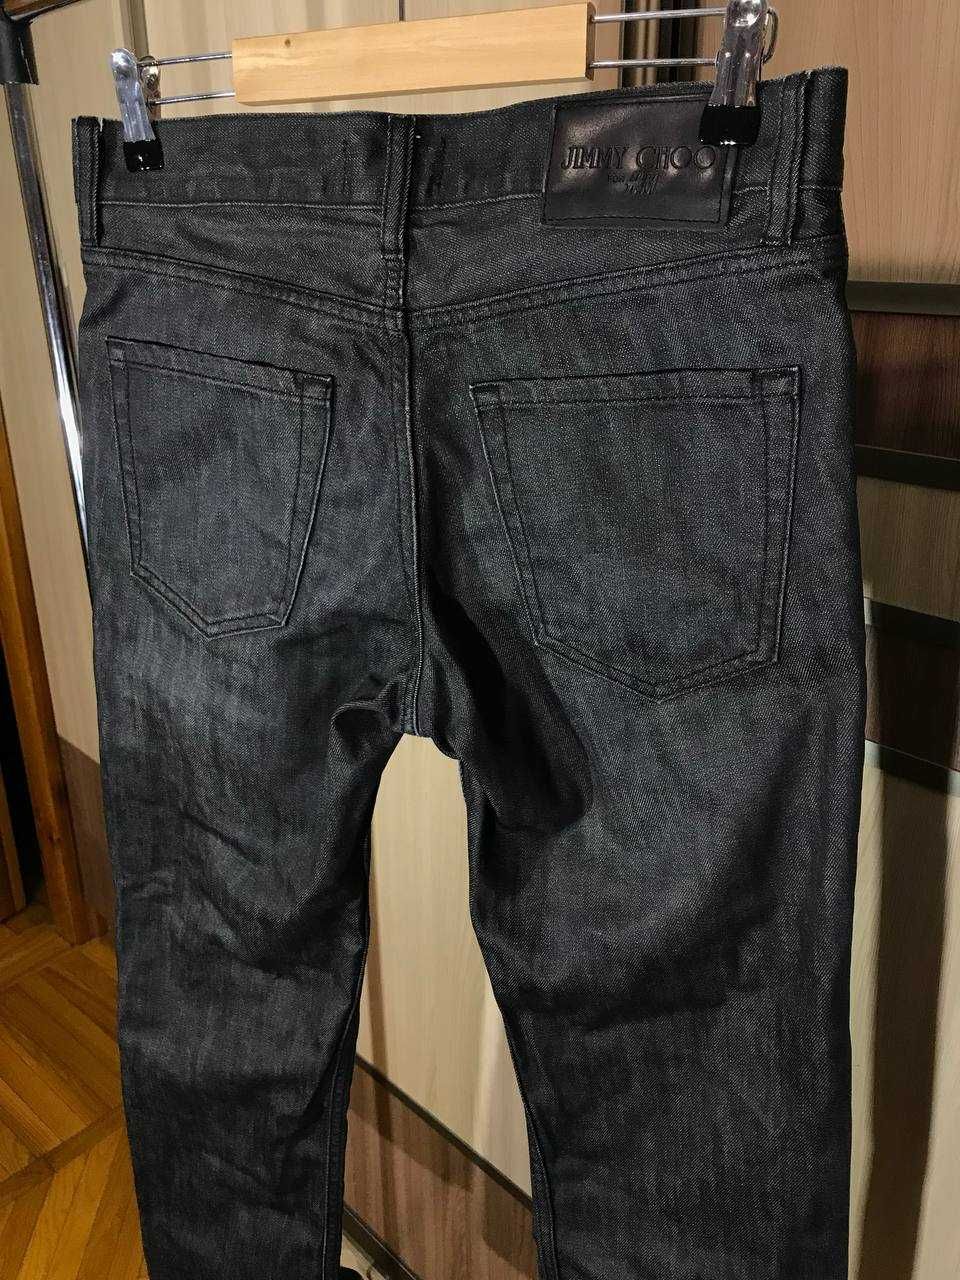 Мужские джинсы штаны Jimmy Choo/H&M Size 29 оригинал